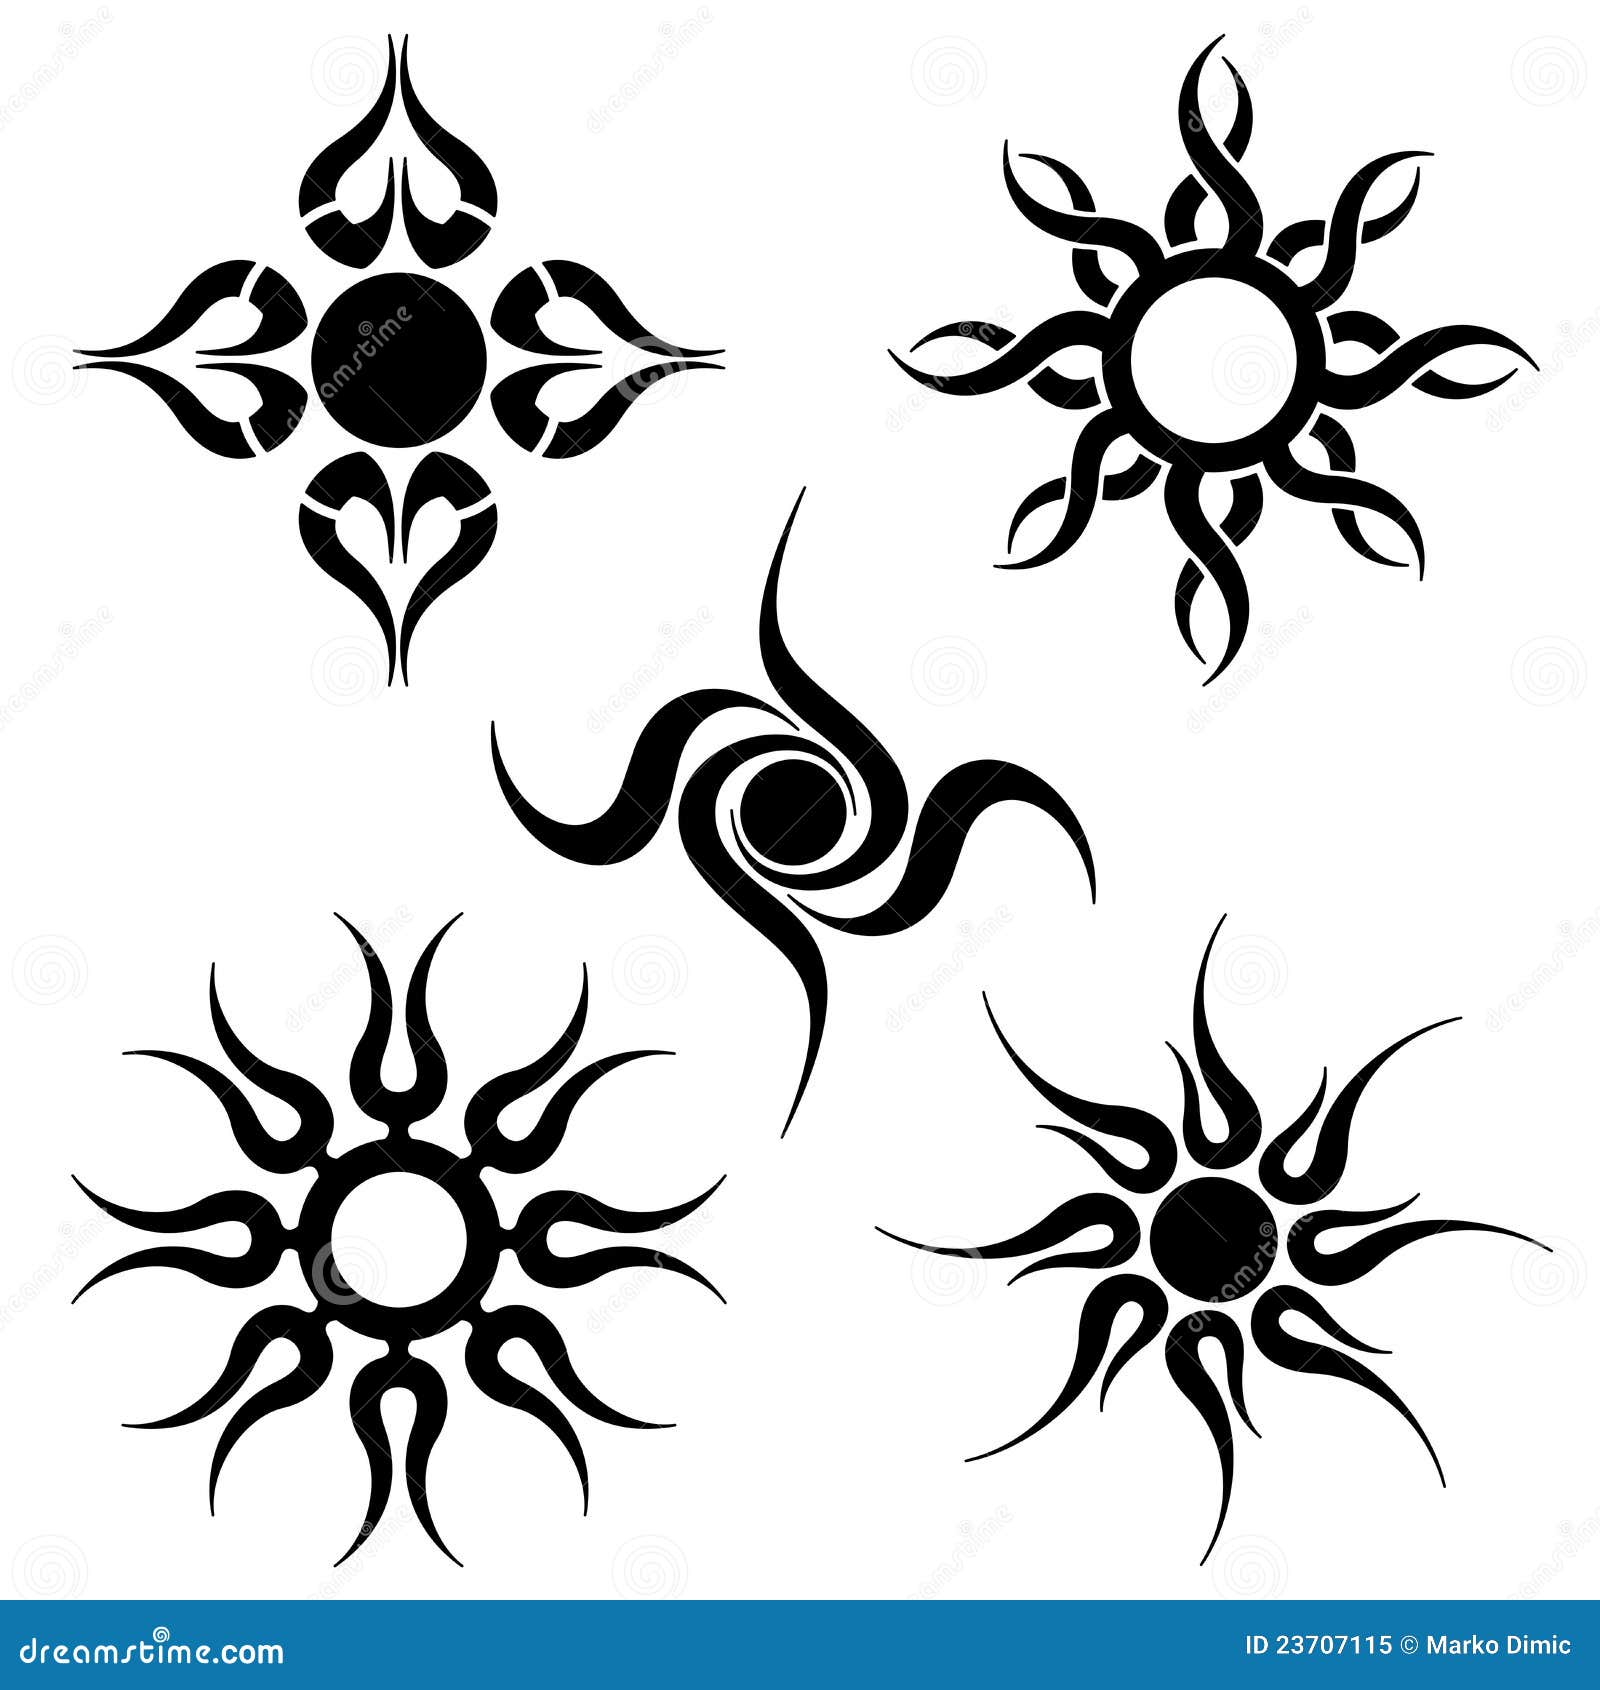 Tribal Sun Tattoo's Royalty Free Stock Photo - Image: 23707115